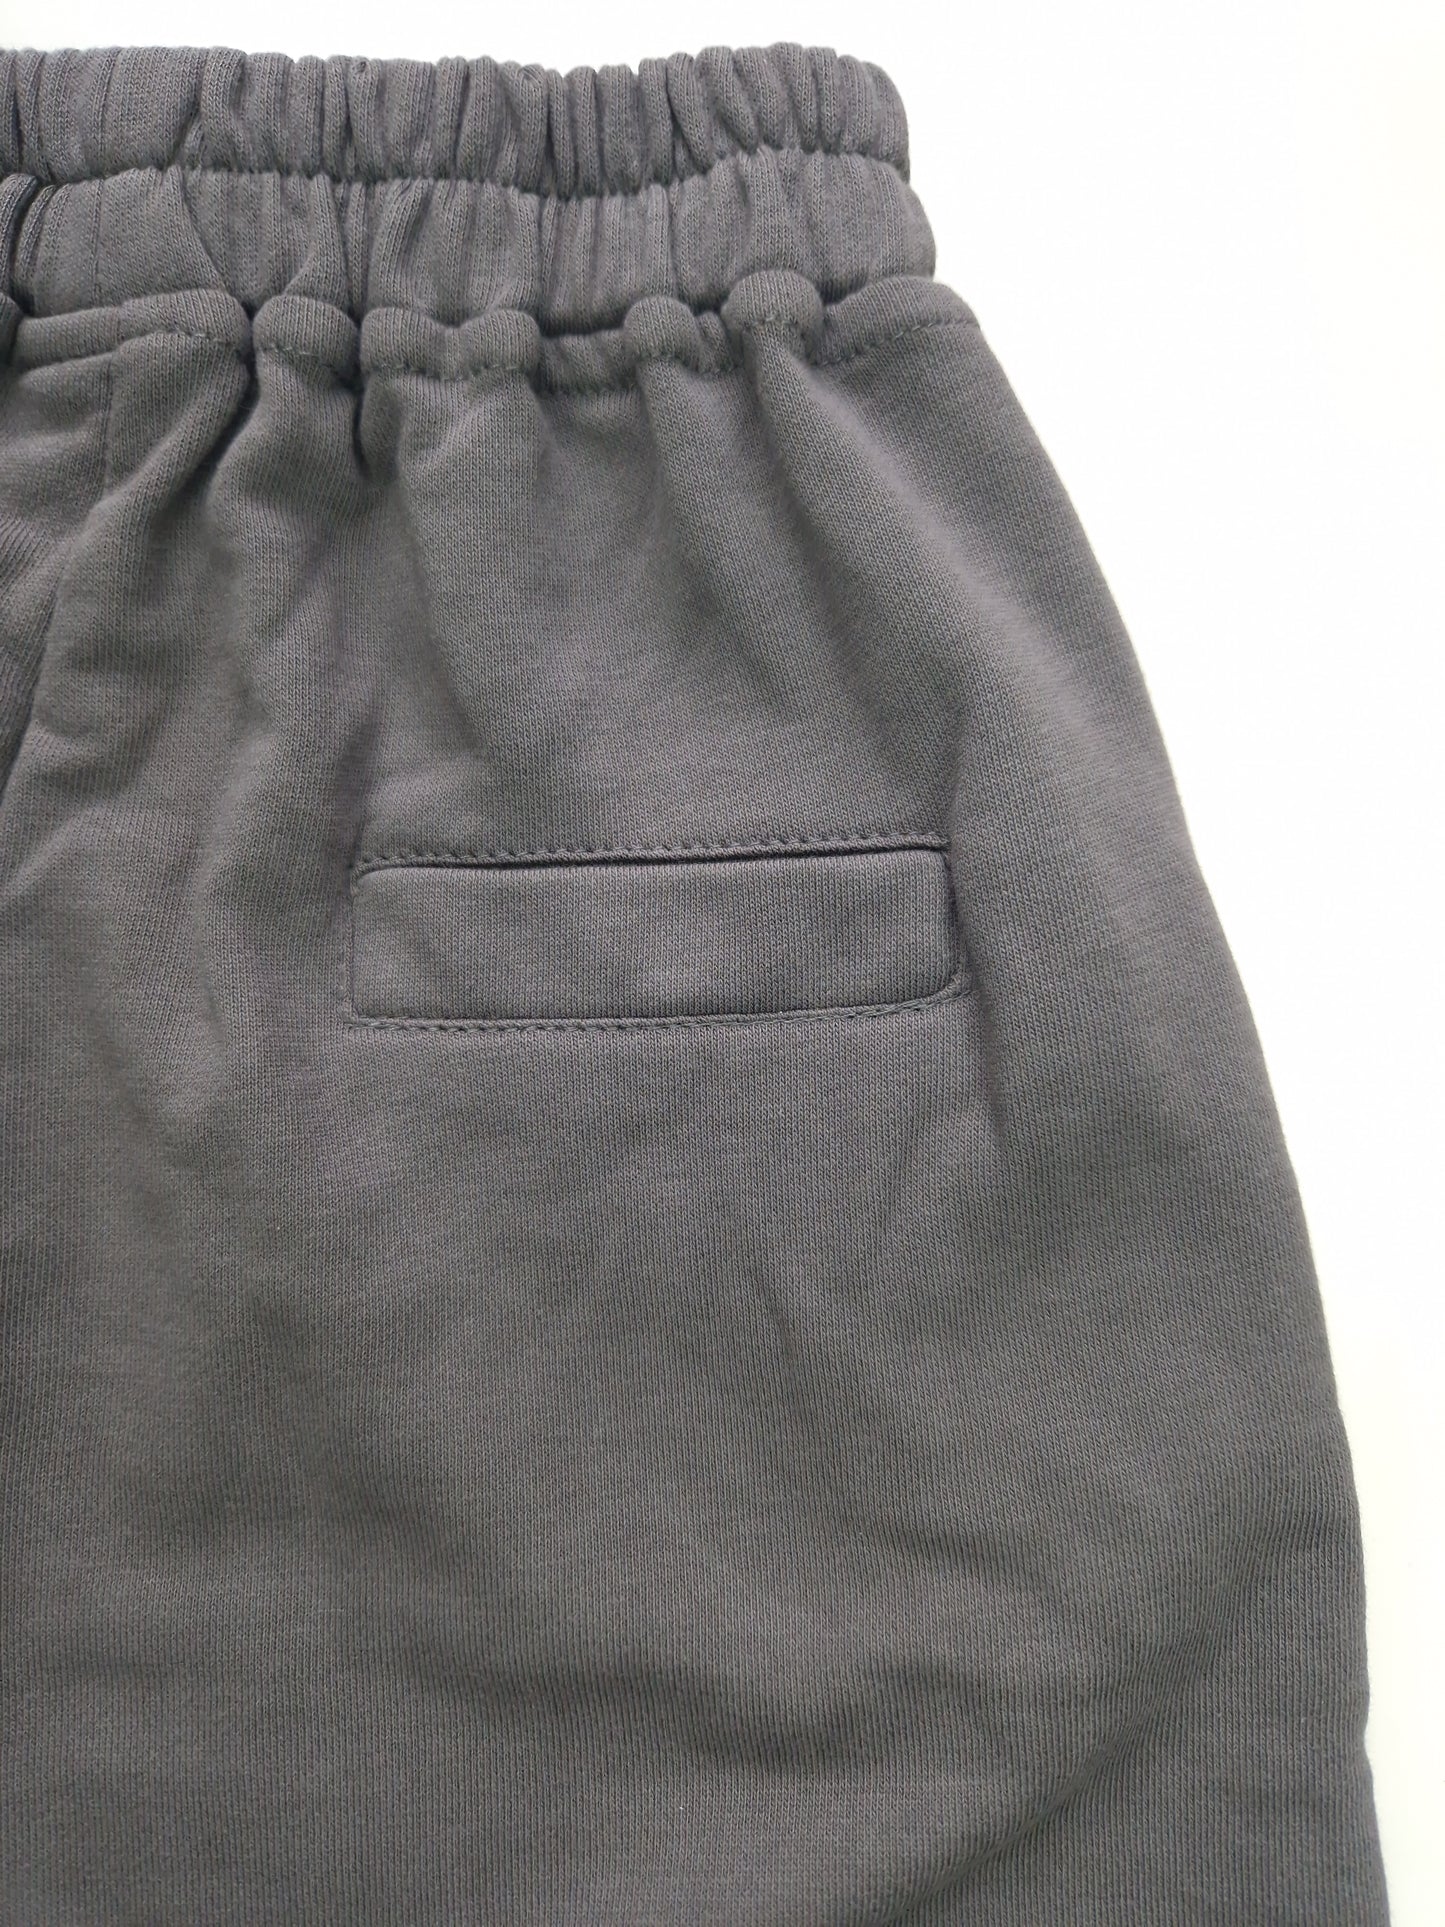 Steel grey raw edge shorts